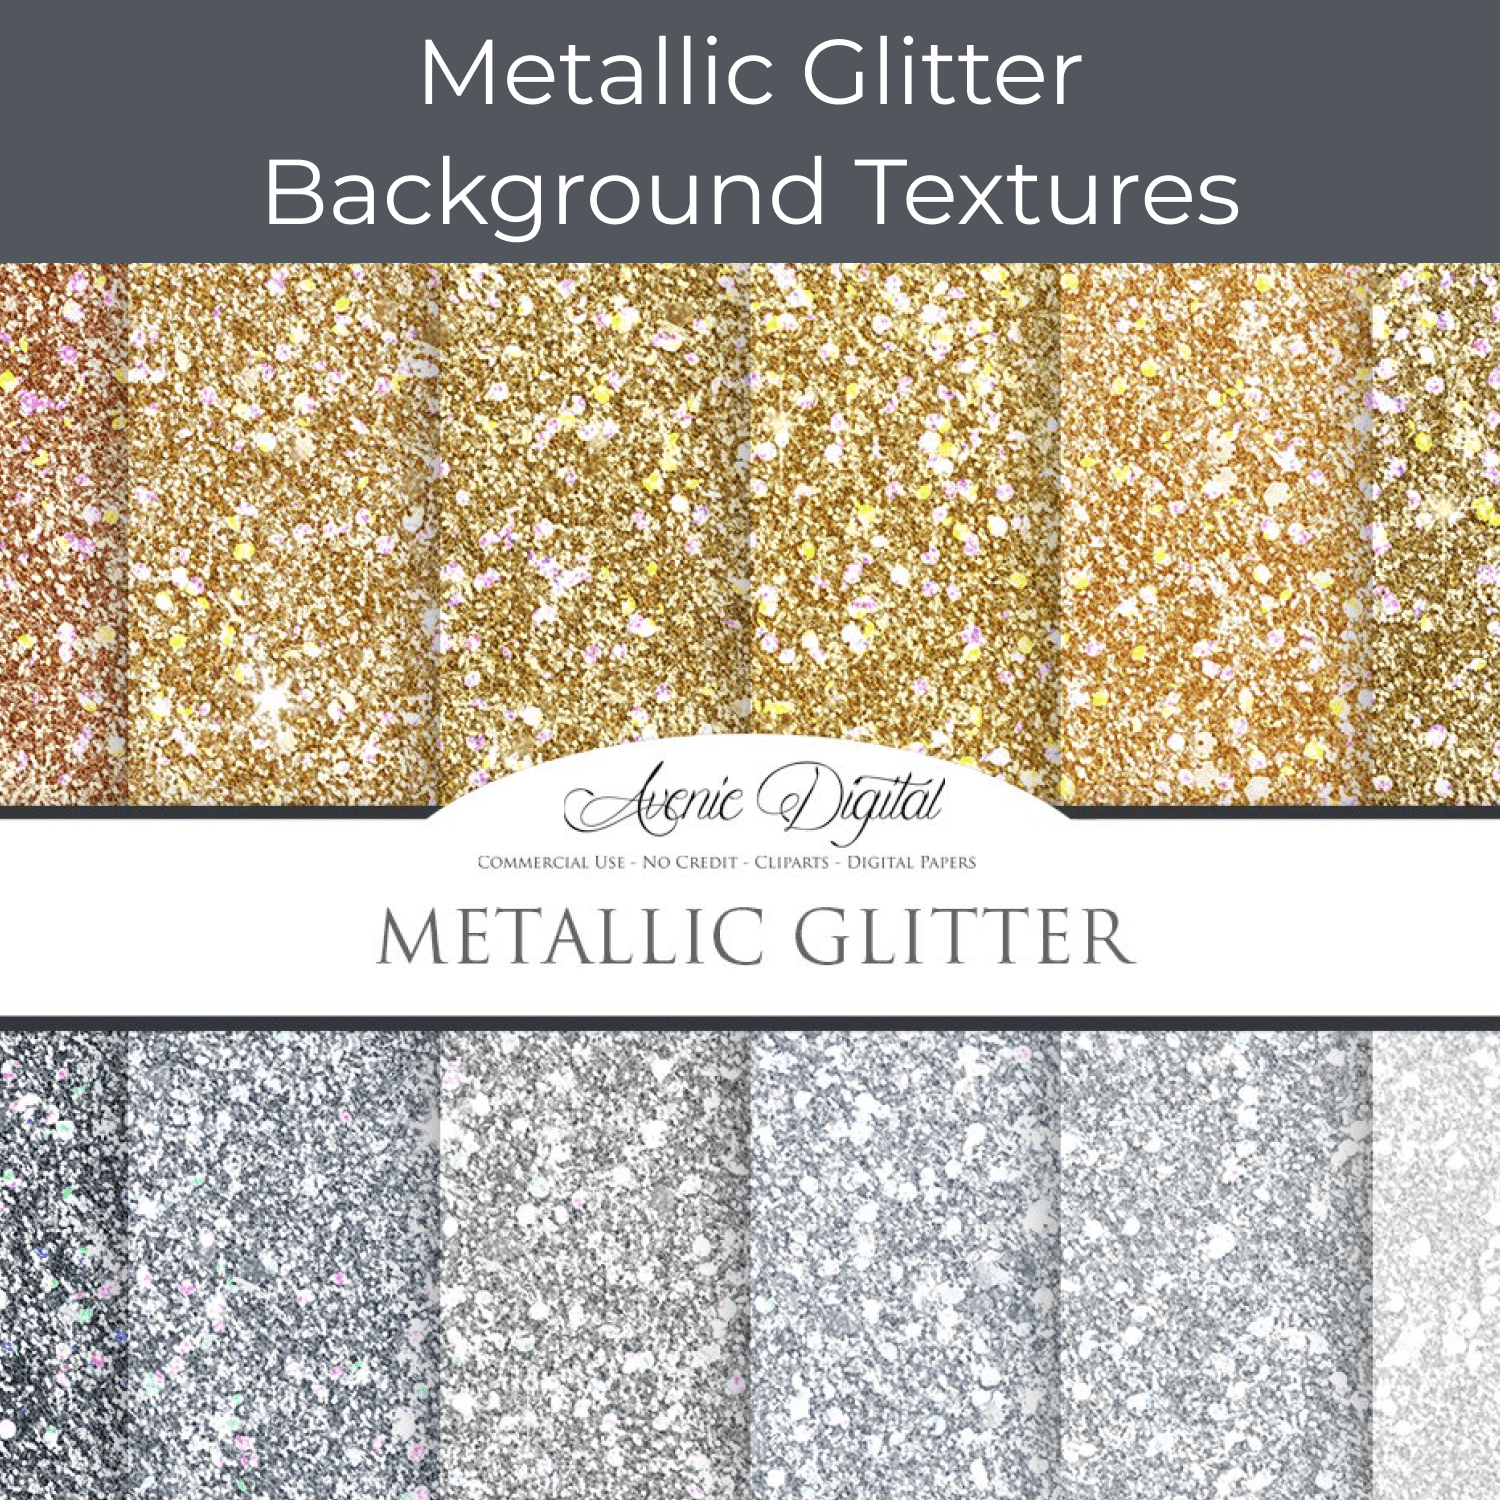 Metallic Glitter Background Textures.